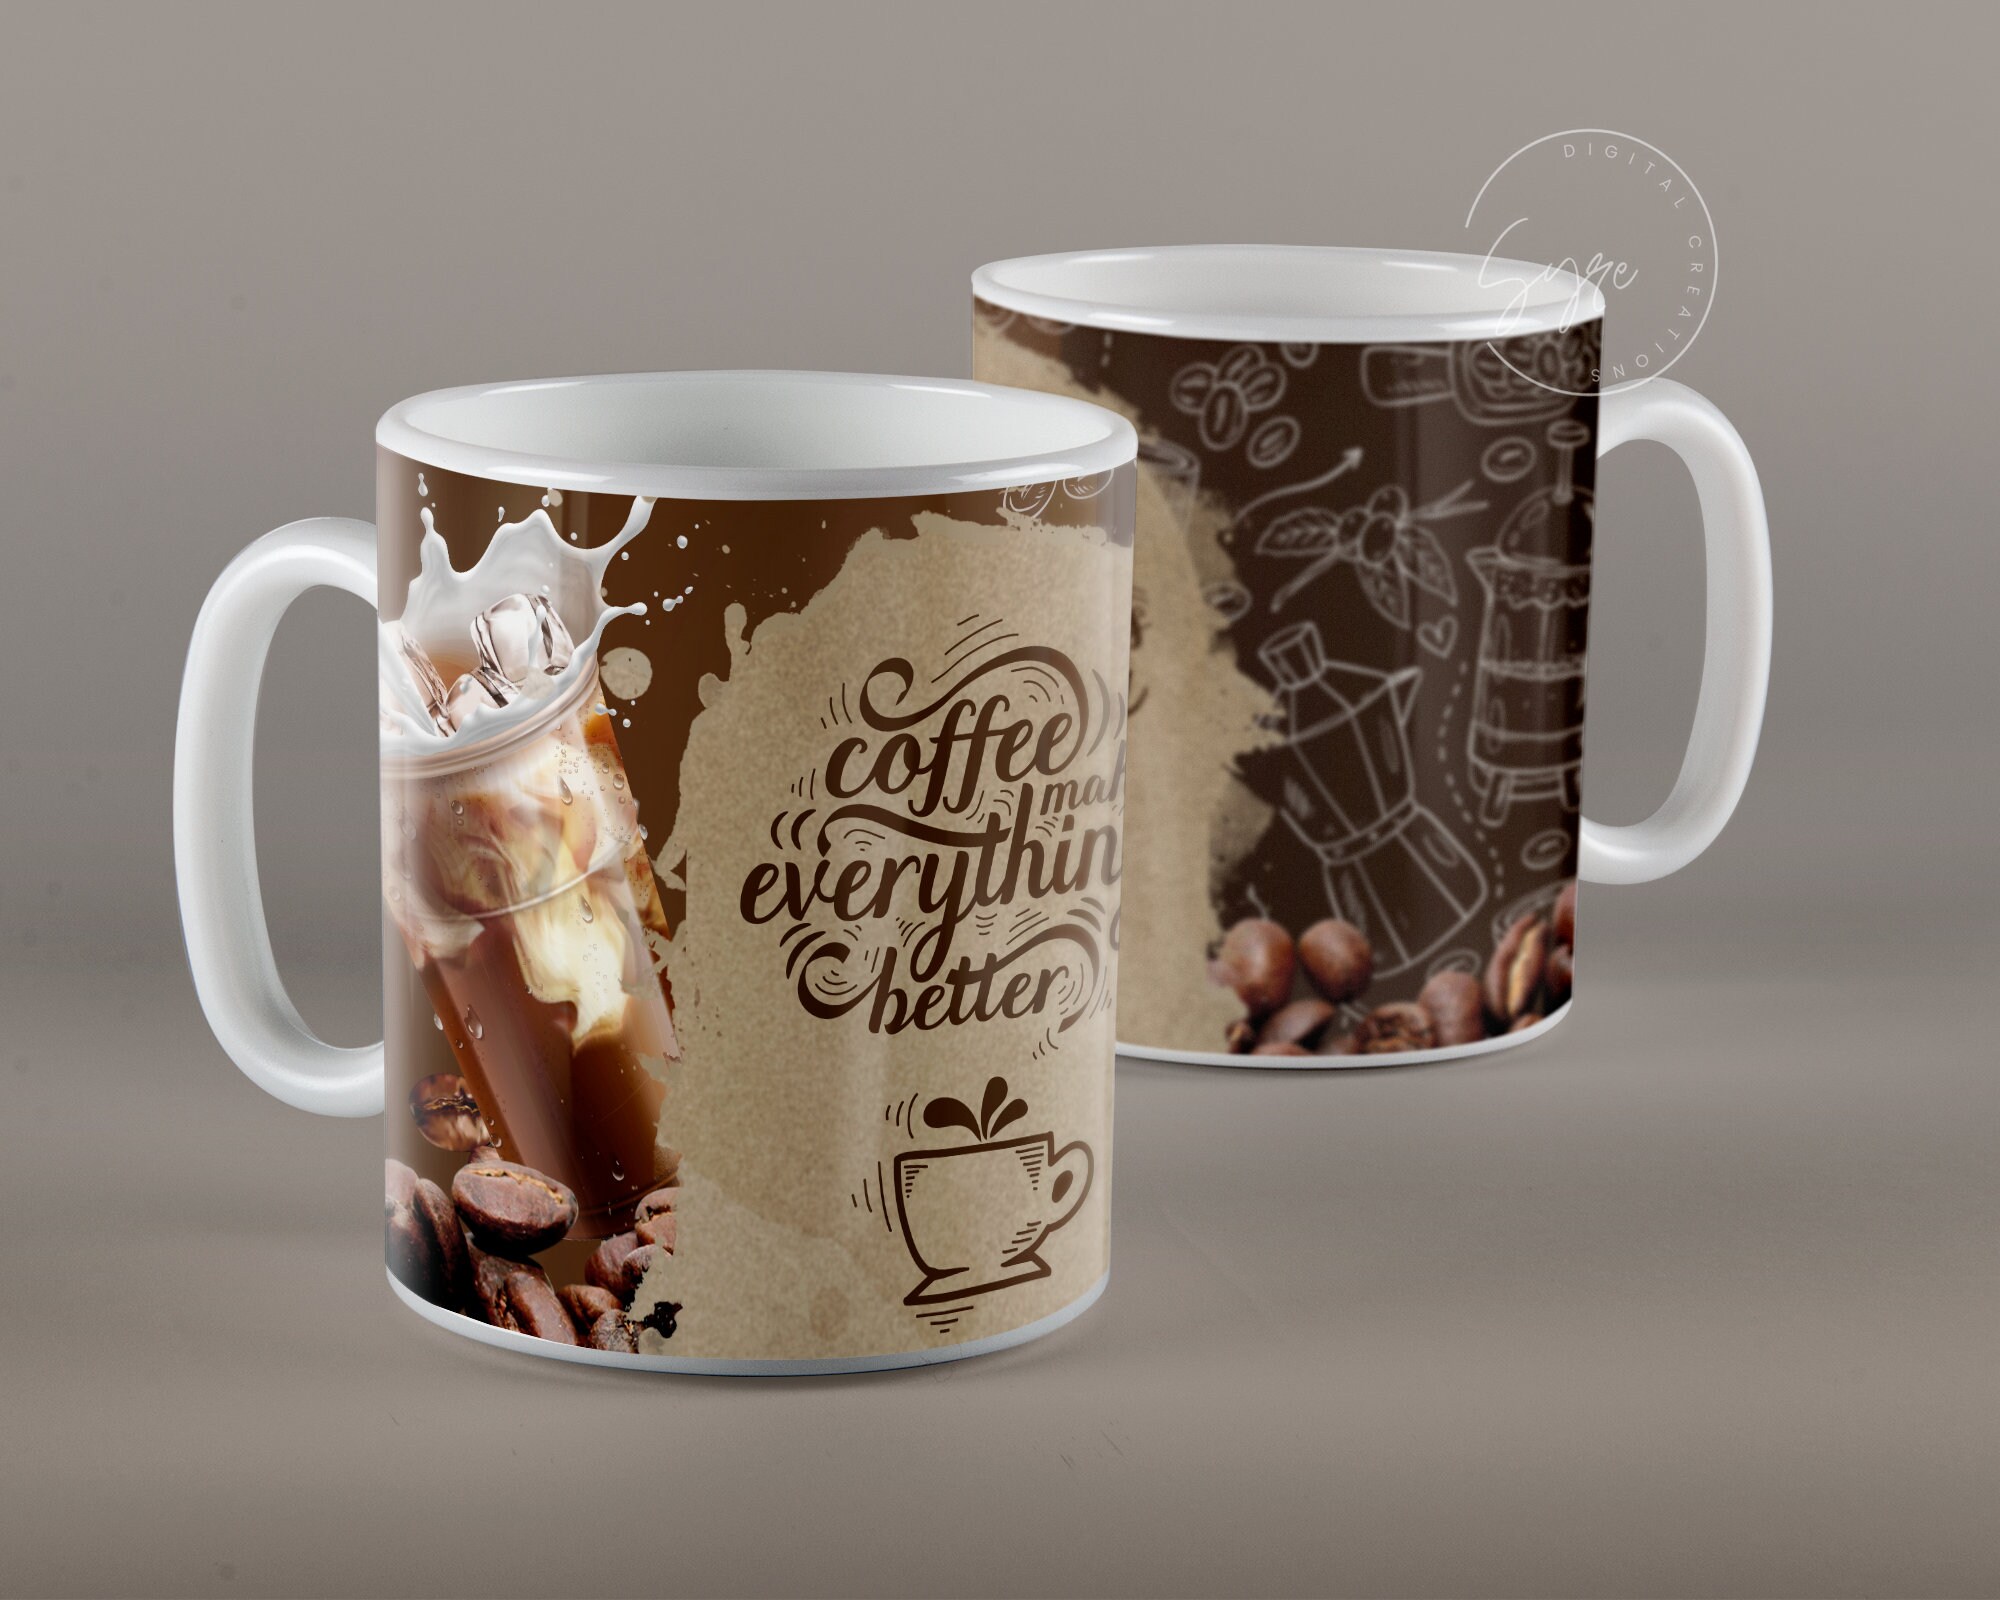 Bulk Coffee Mug Printing: Customized Mugs for Branding and Personalization  by ARC Print India - Issuu